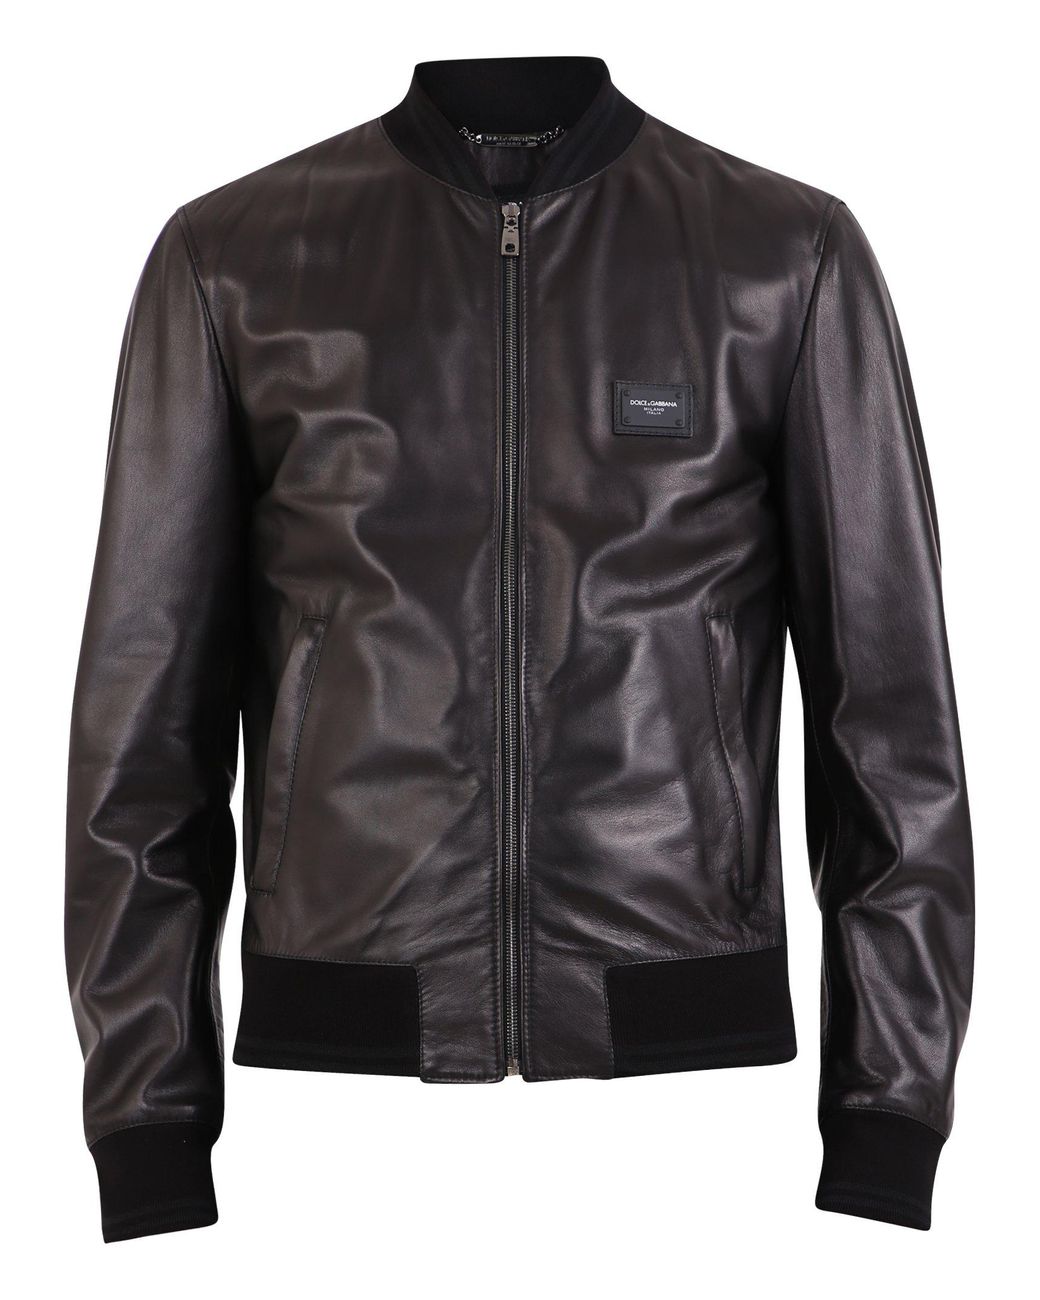 Dolce & Gabbana Leather Bomber Jacket in Black for Men - Lyst